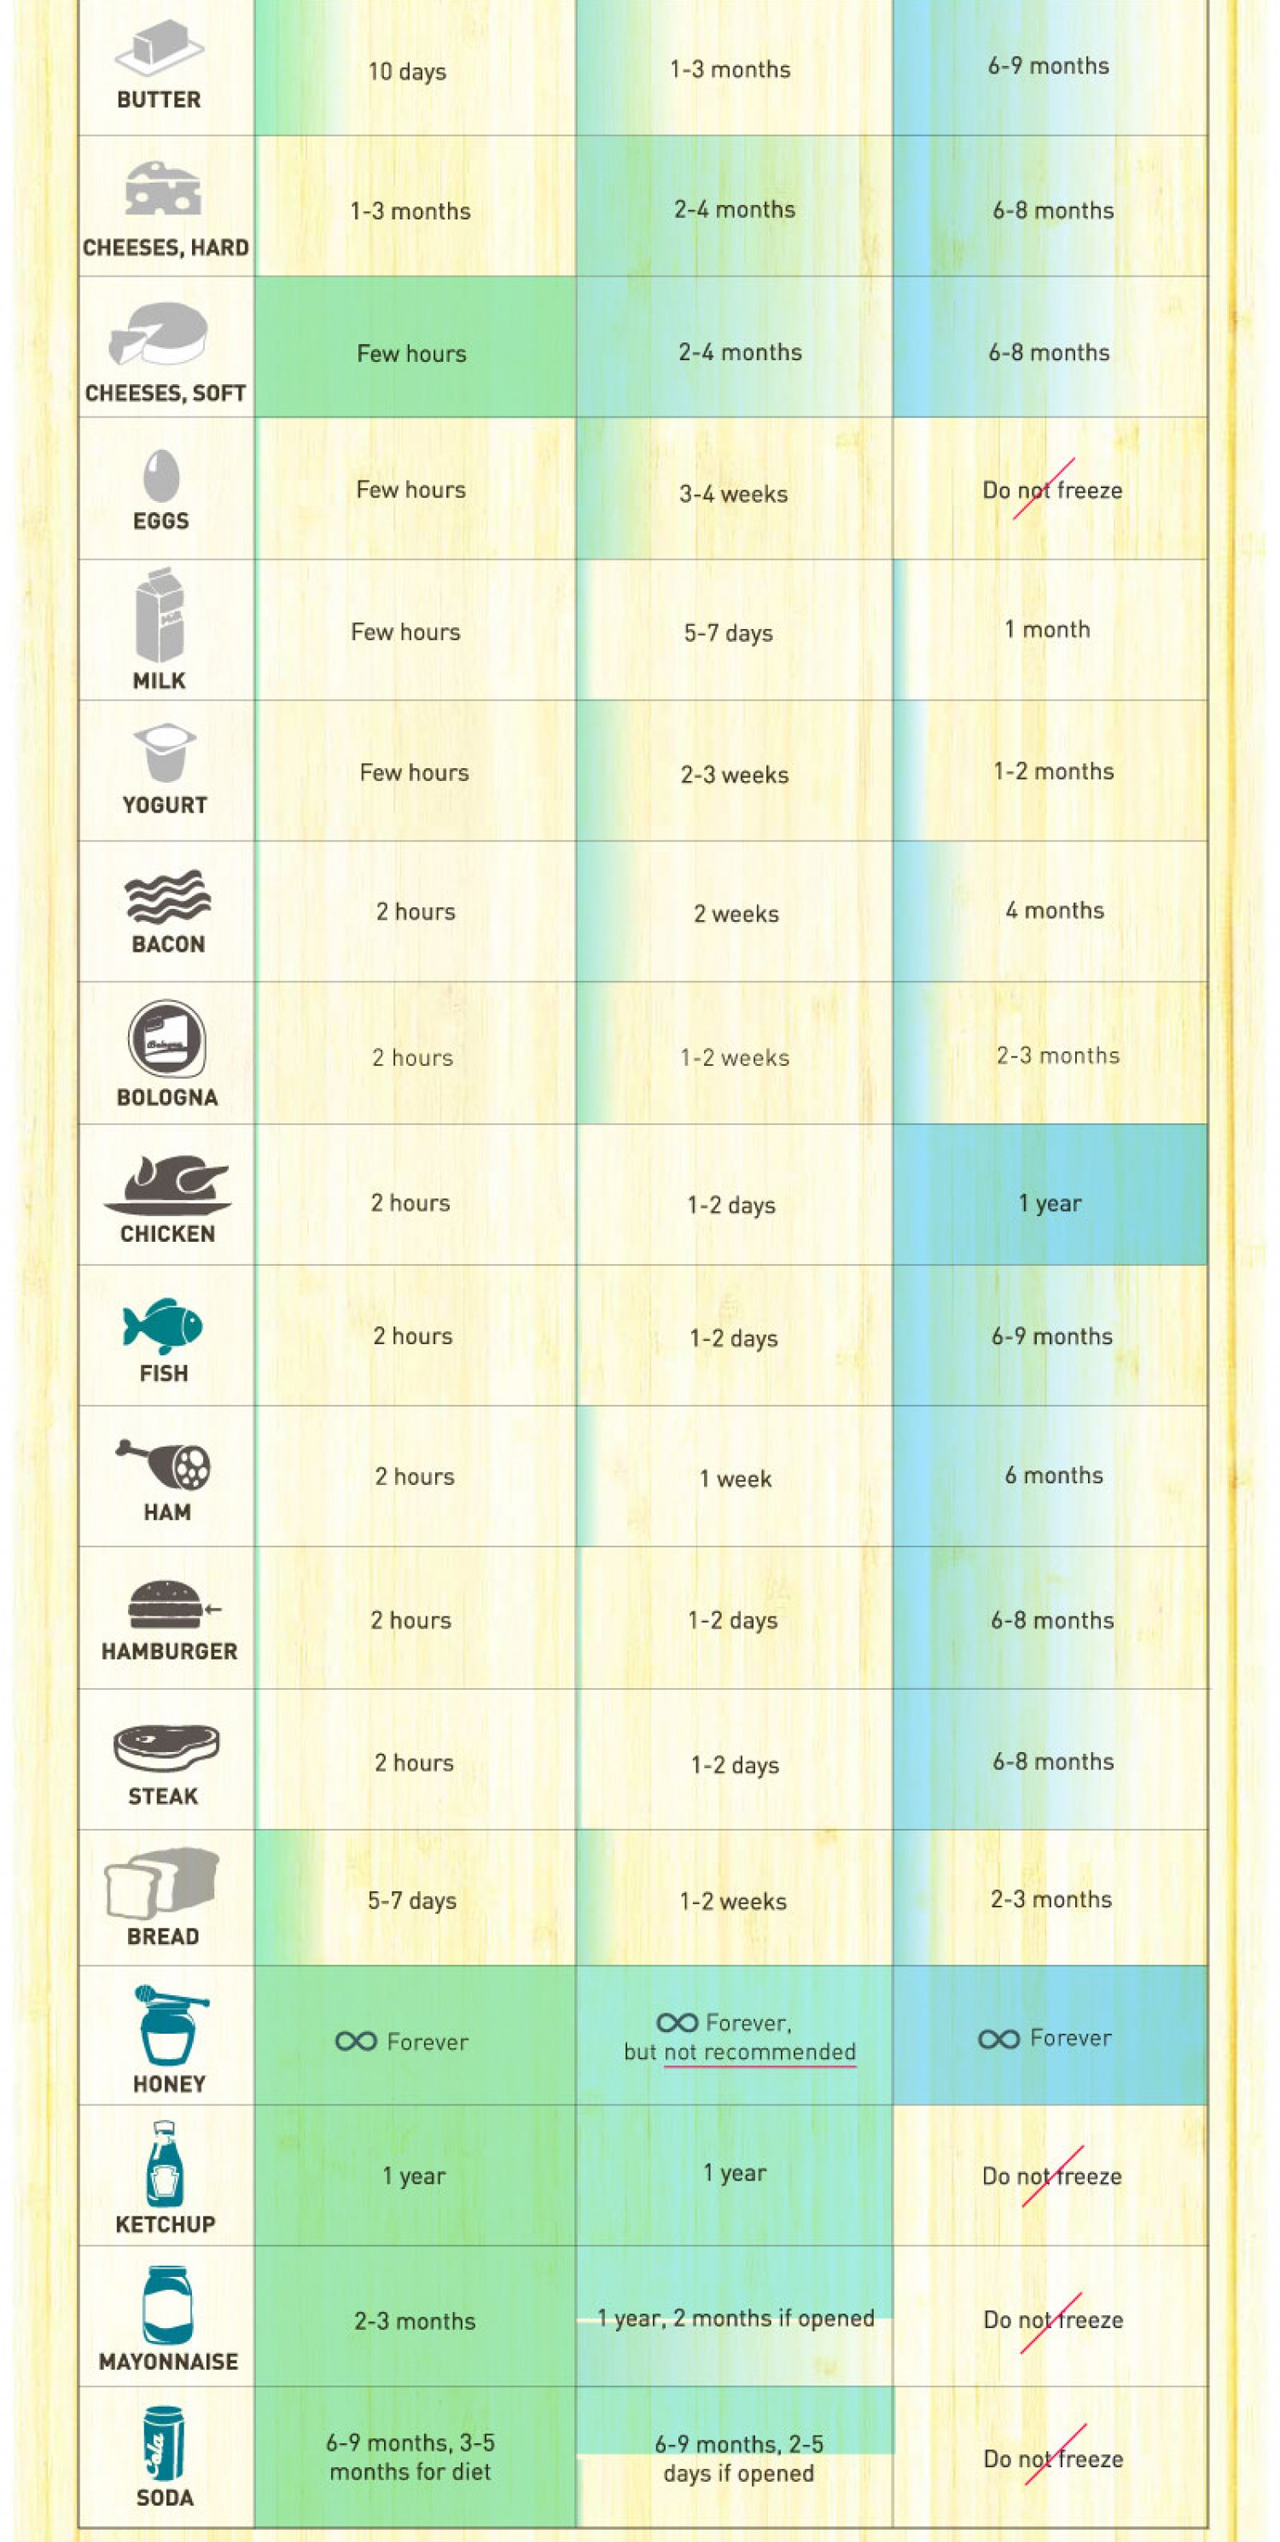 Food Shelf Life infographic 2